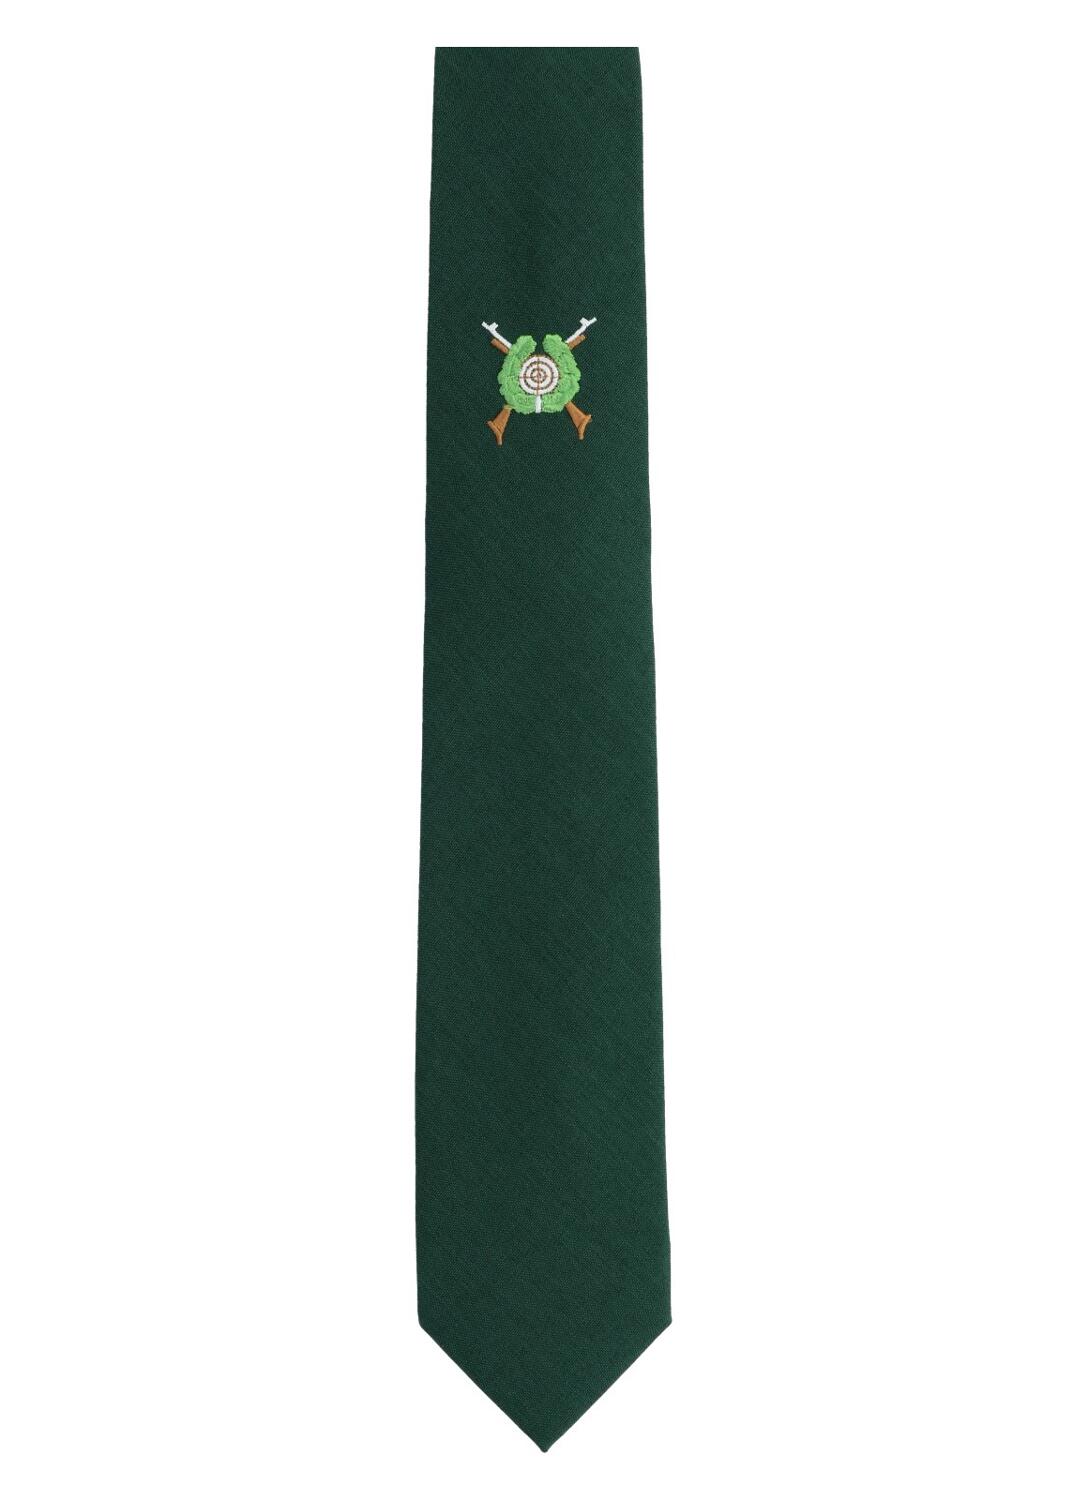 Willen Schützenkrawatte,Krawatte,Krawatte grün,Krawatte Hemd,Krawatte Anzug  | Deutschland